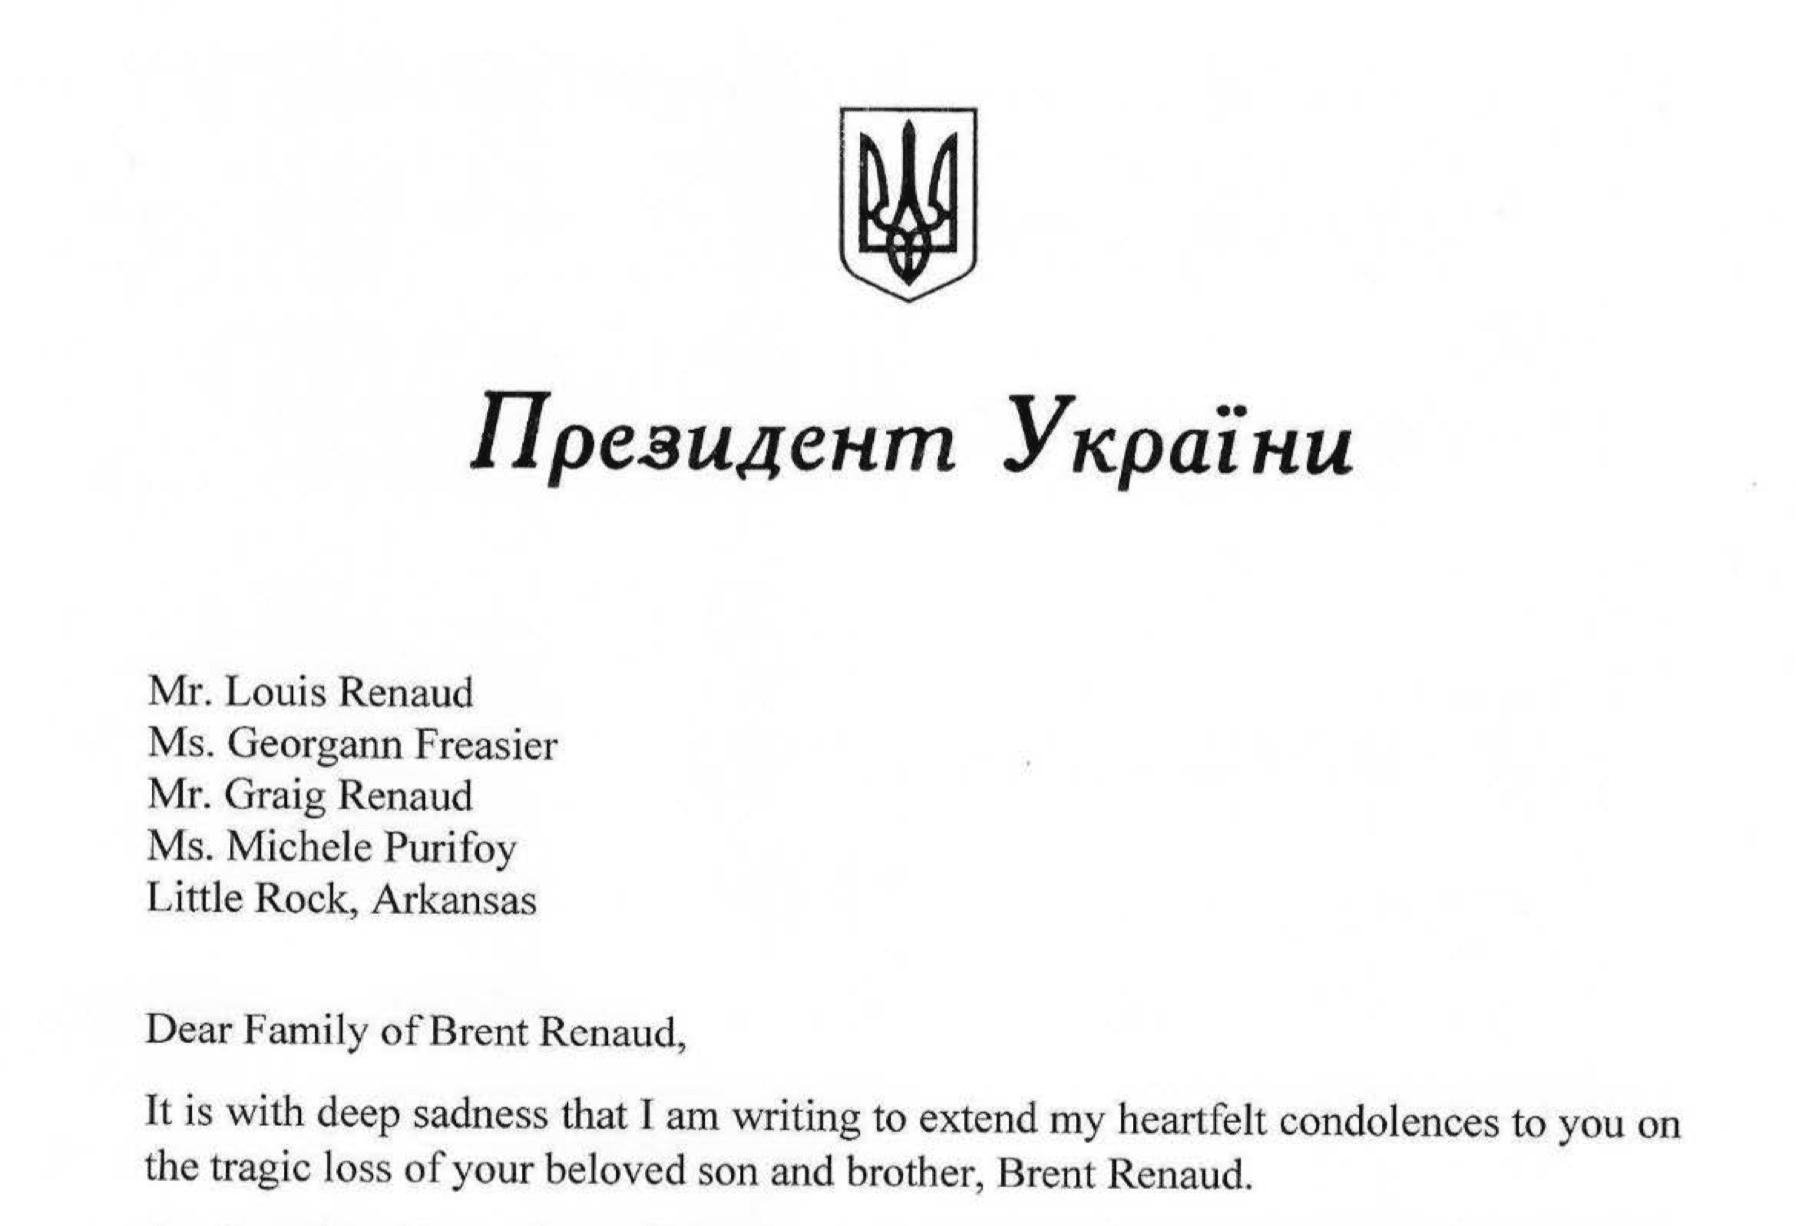 Ukraine President Sends Letter to Family of Deceased American Journalist